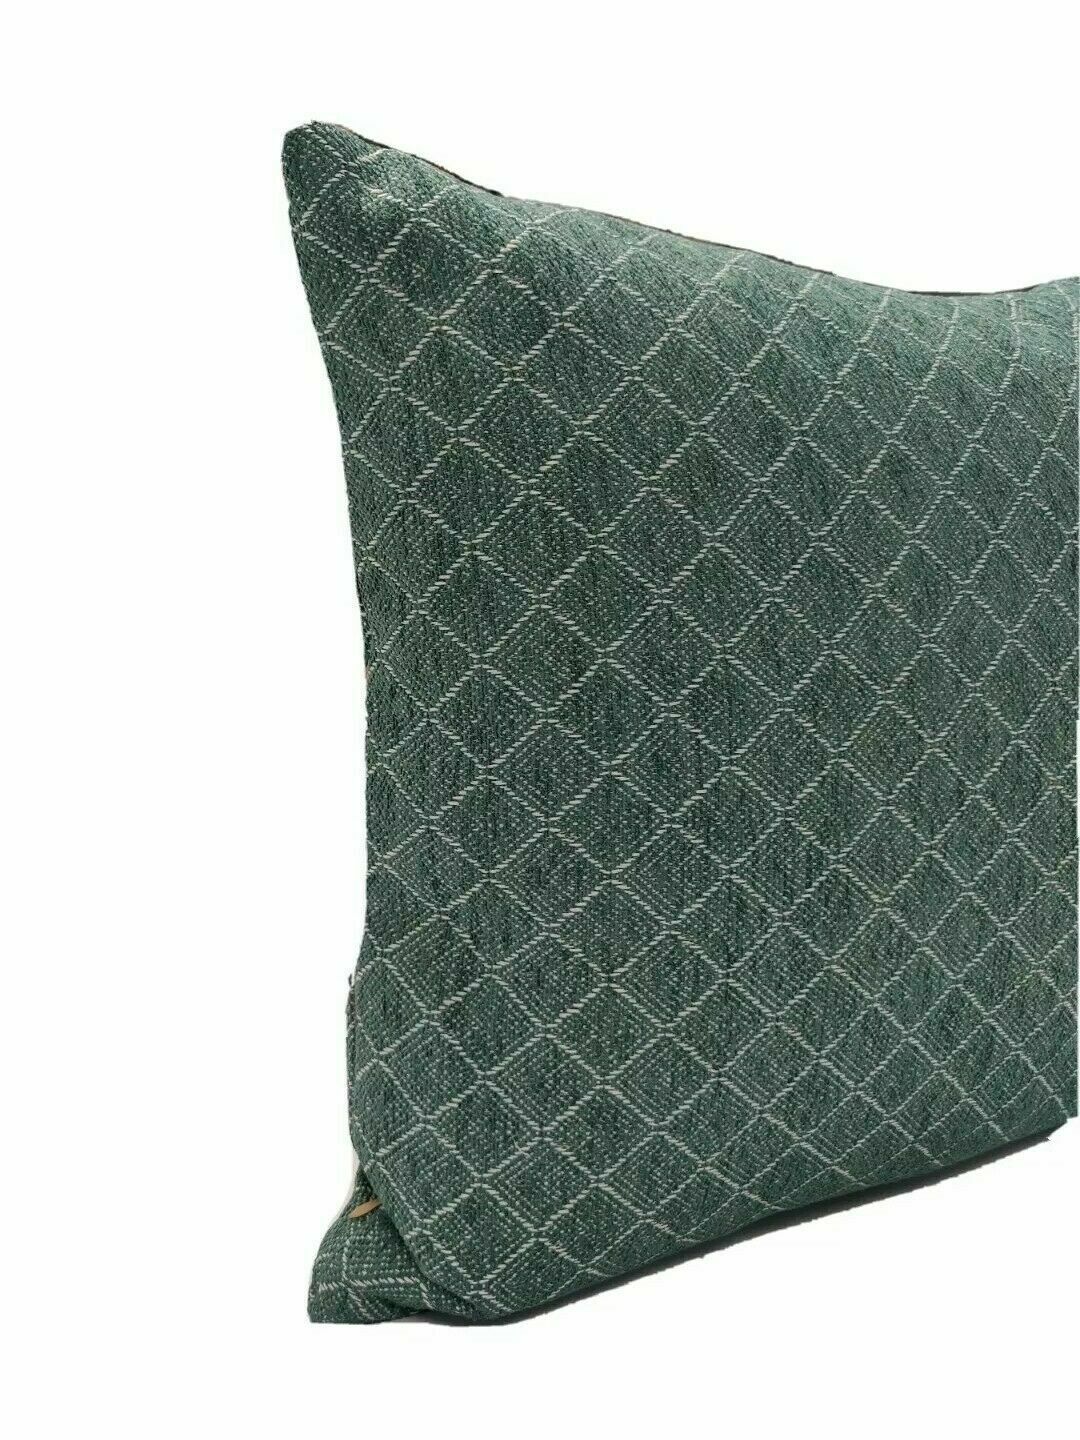 iLiv Alpine Teal 18" / 45cm Cushion Cover